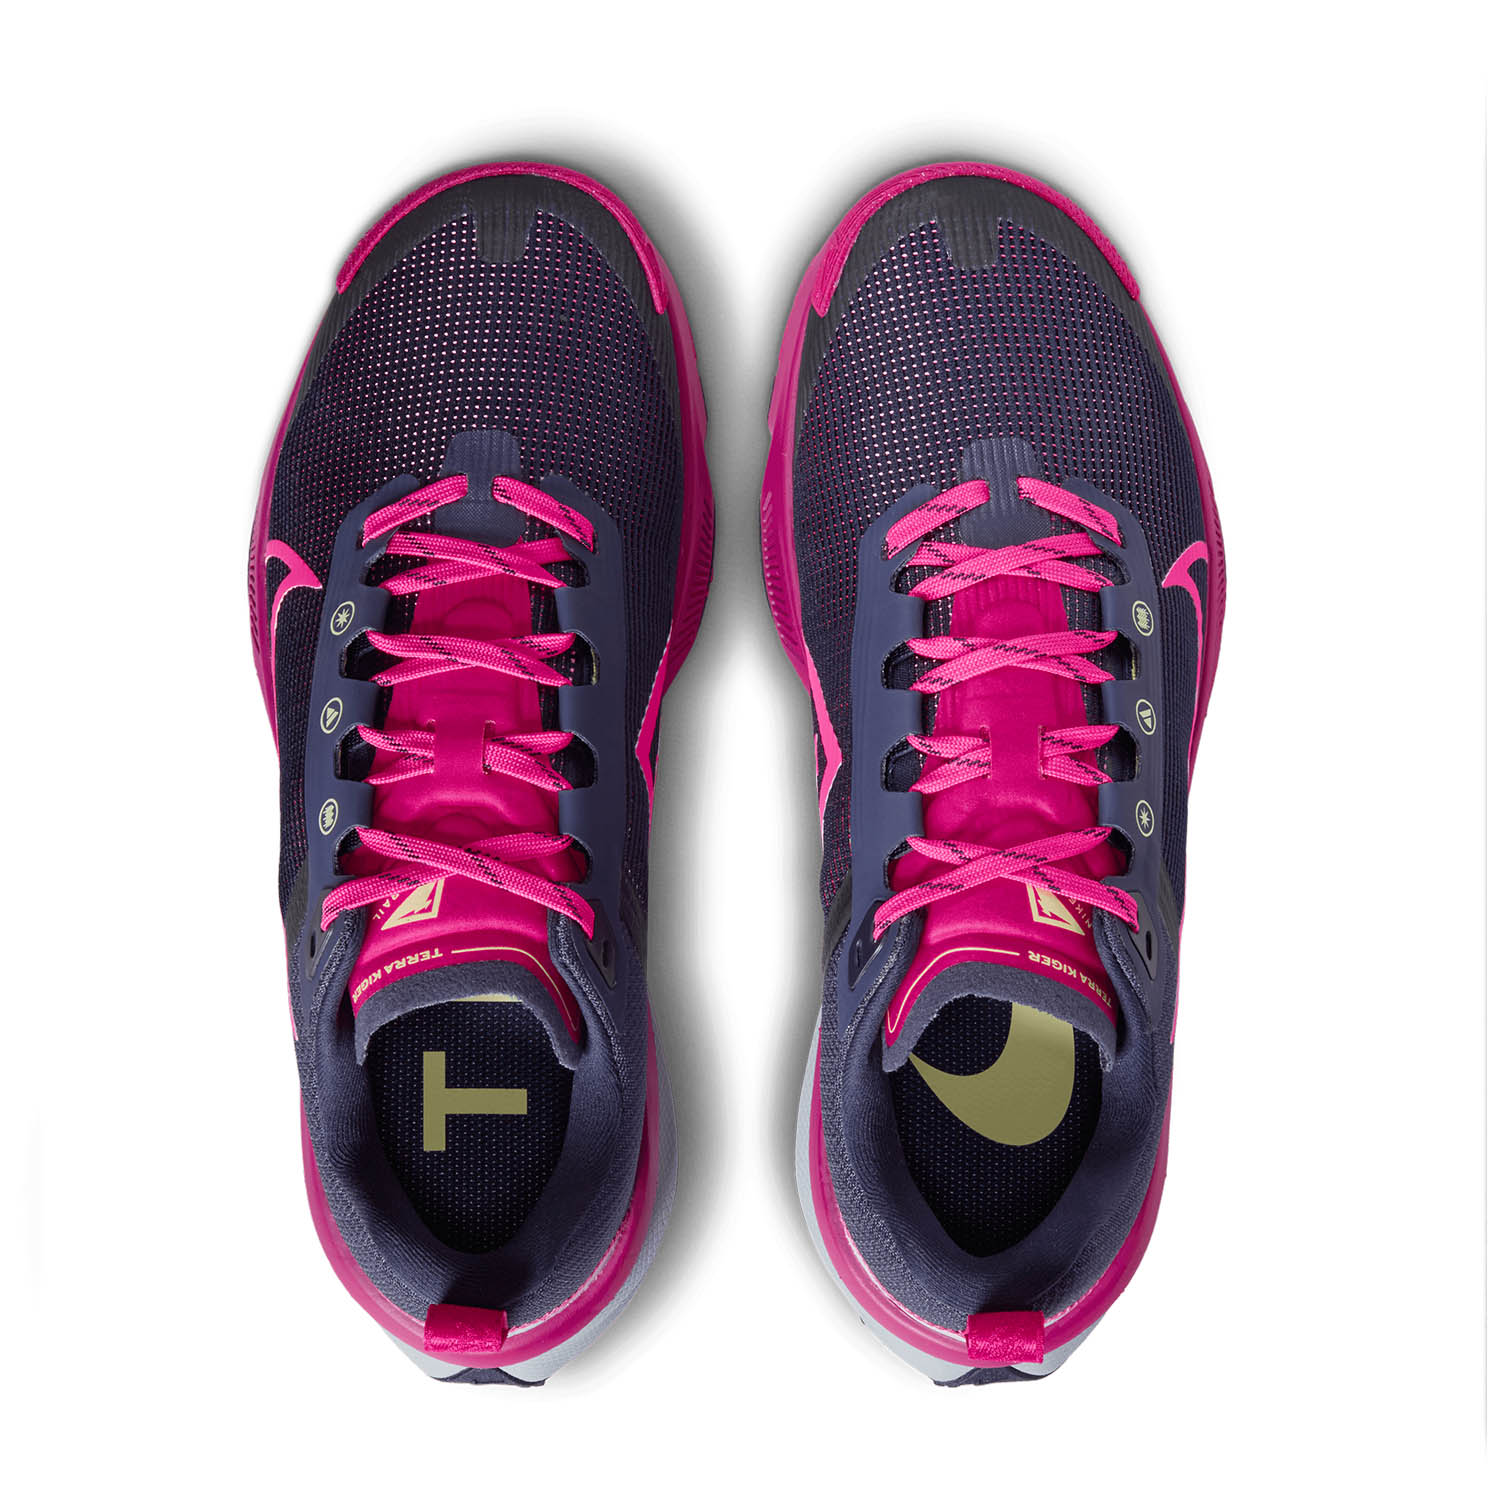 Nike React Terra Kiger 9 - Purple Ink/Fierce Pink/Platinum Violet